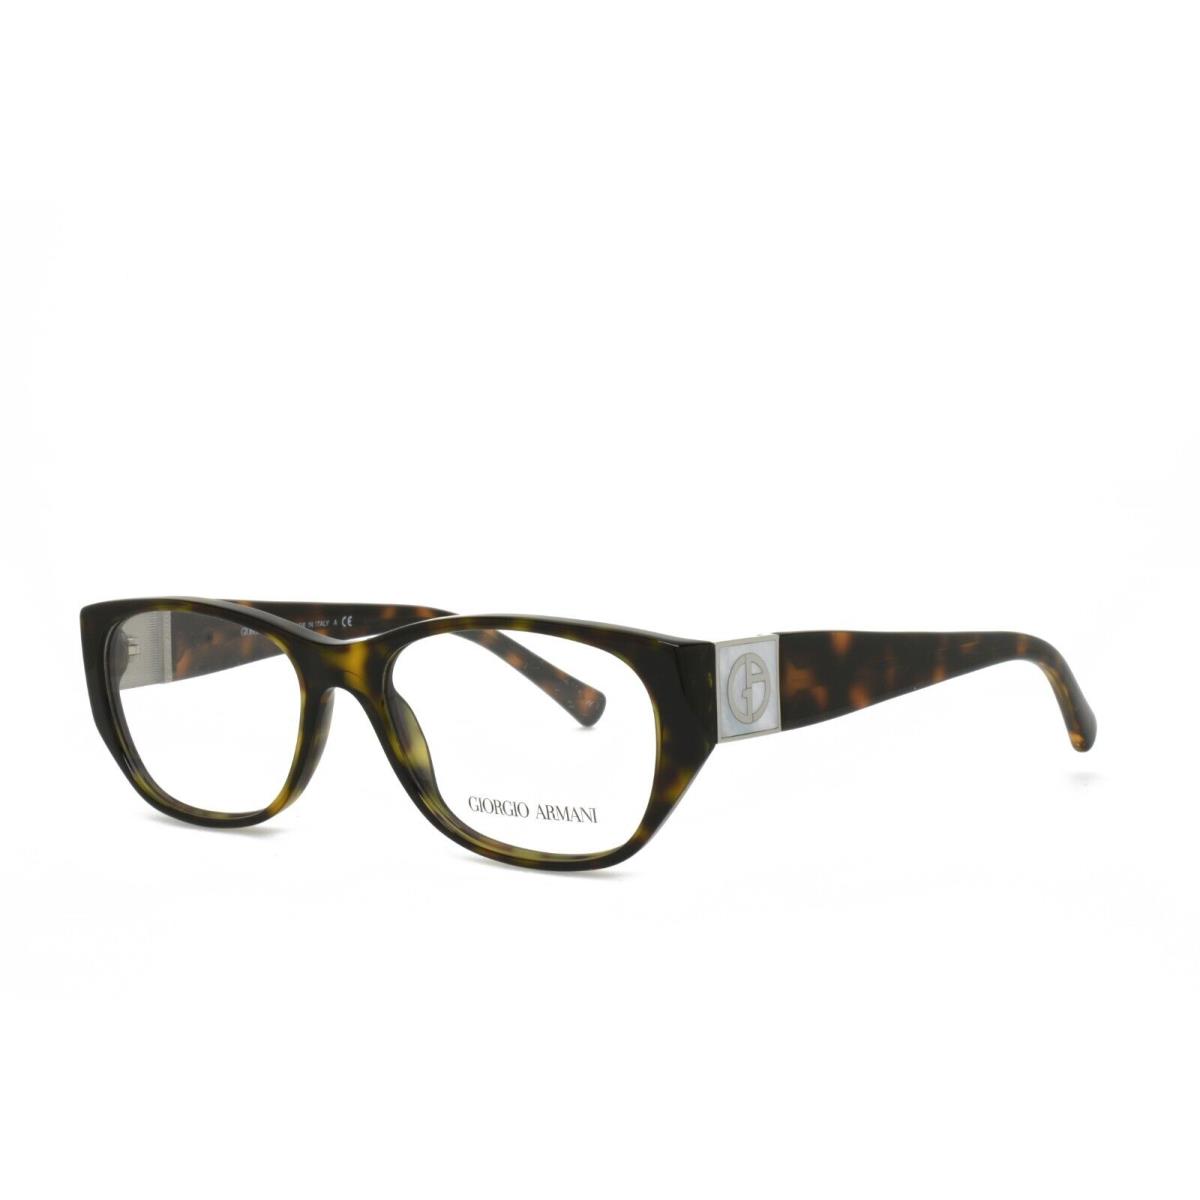 Giorgio Armani 7016H 5026 51-16-140 Tortoise Eyeglasses Frames